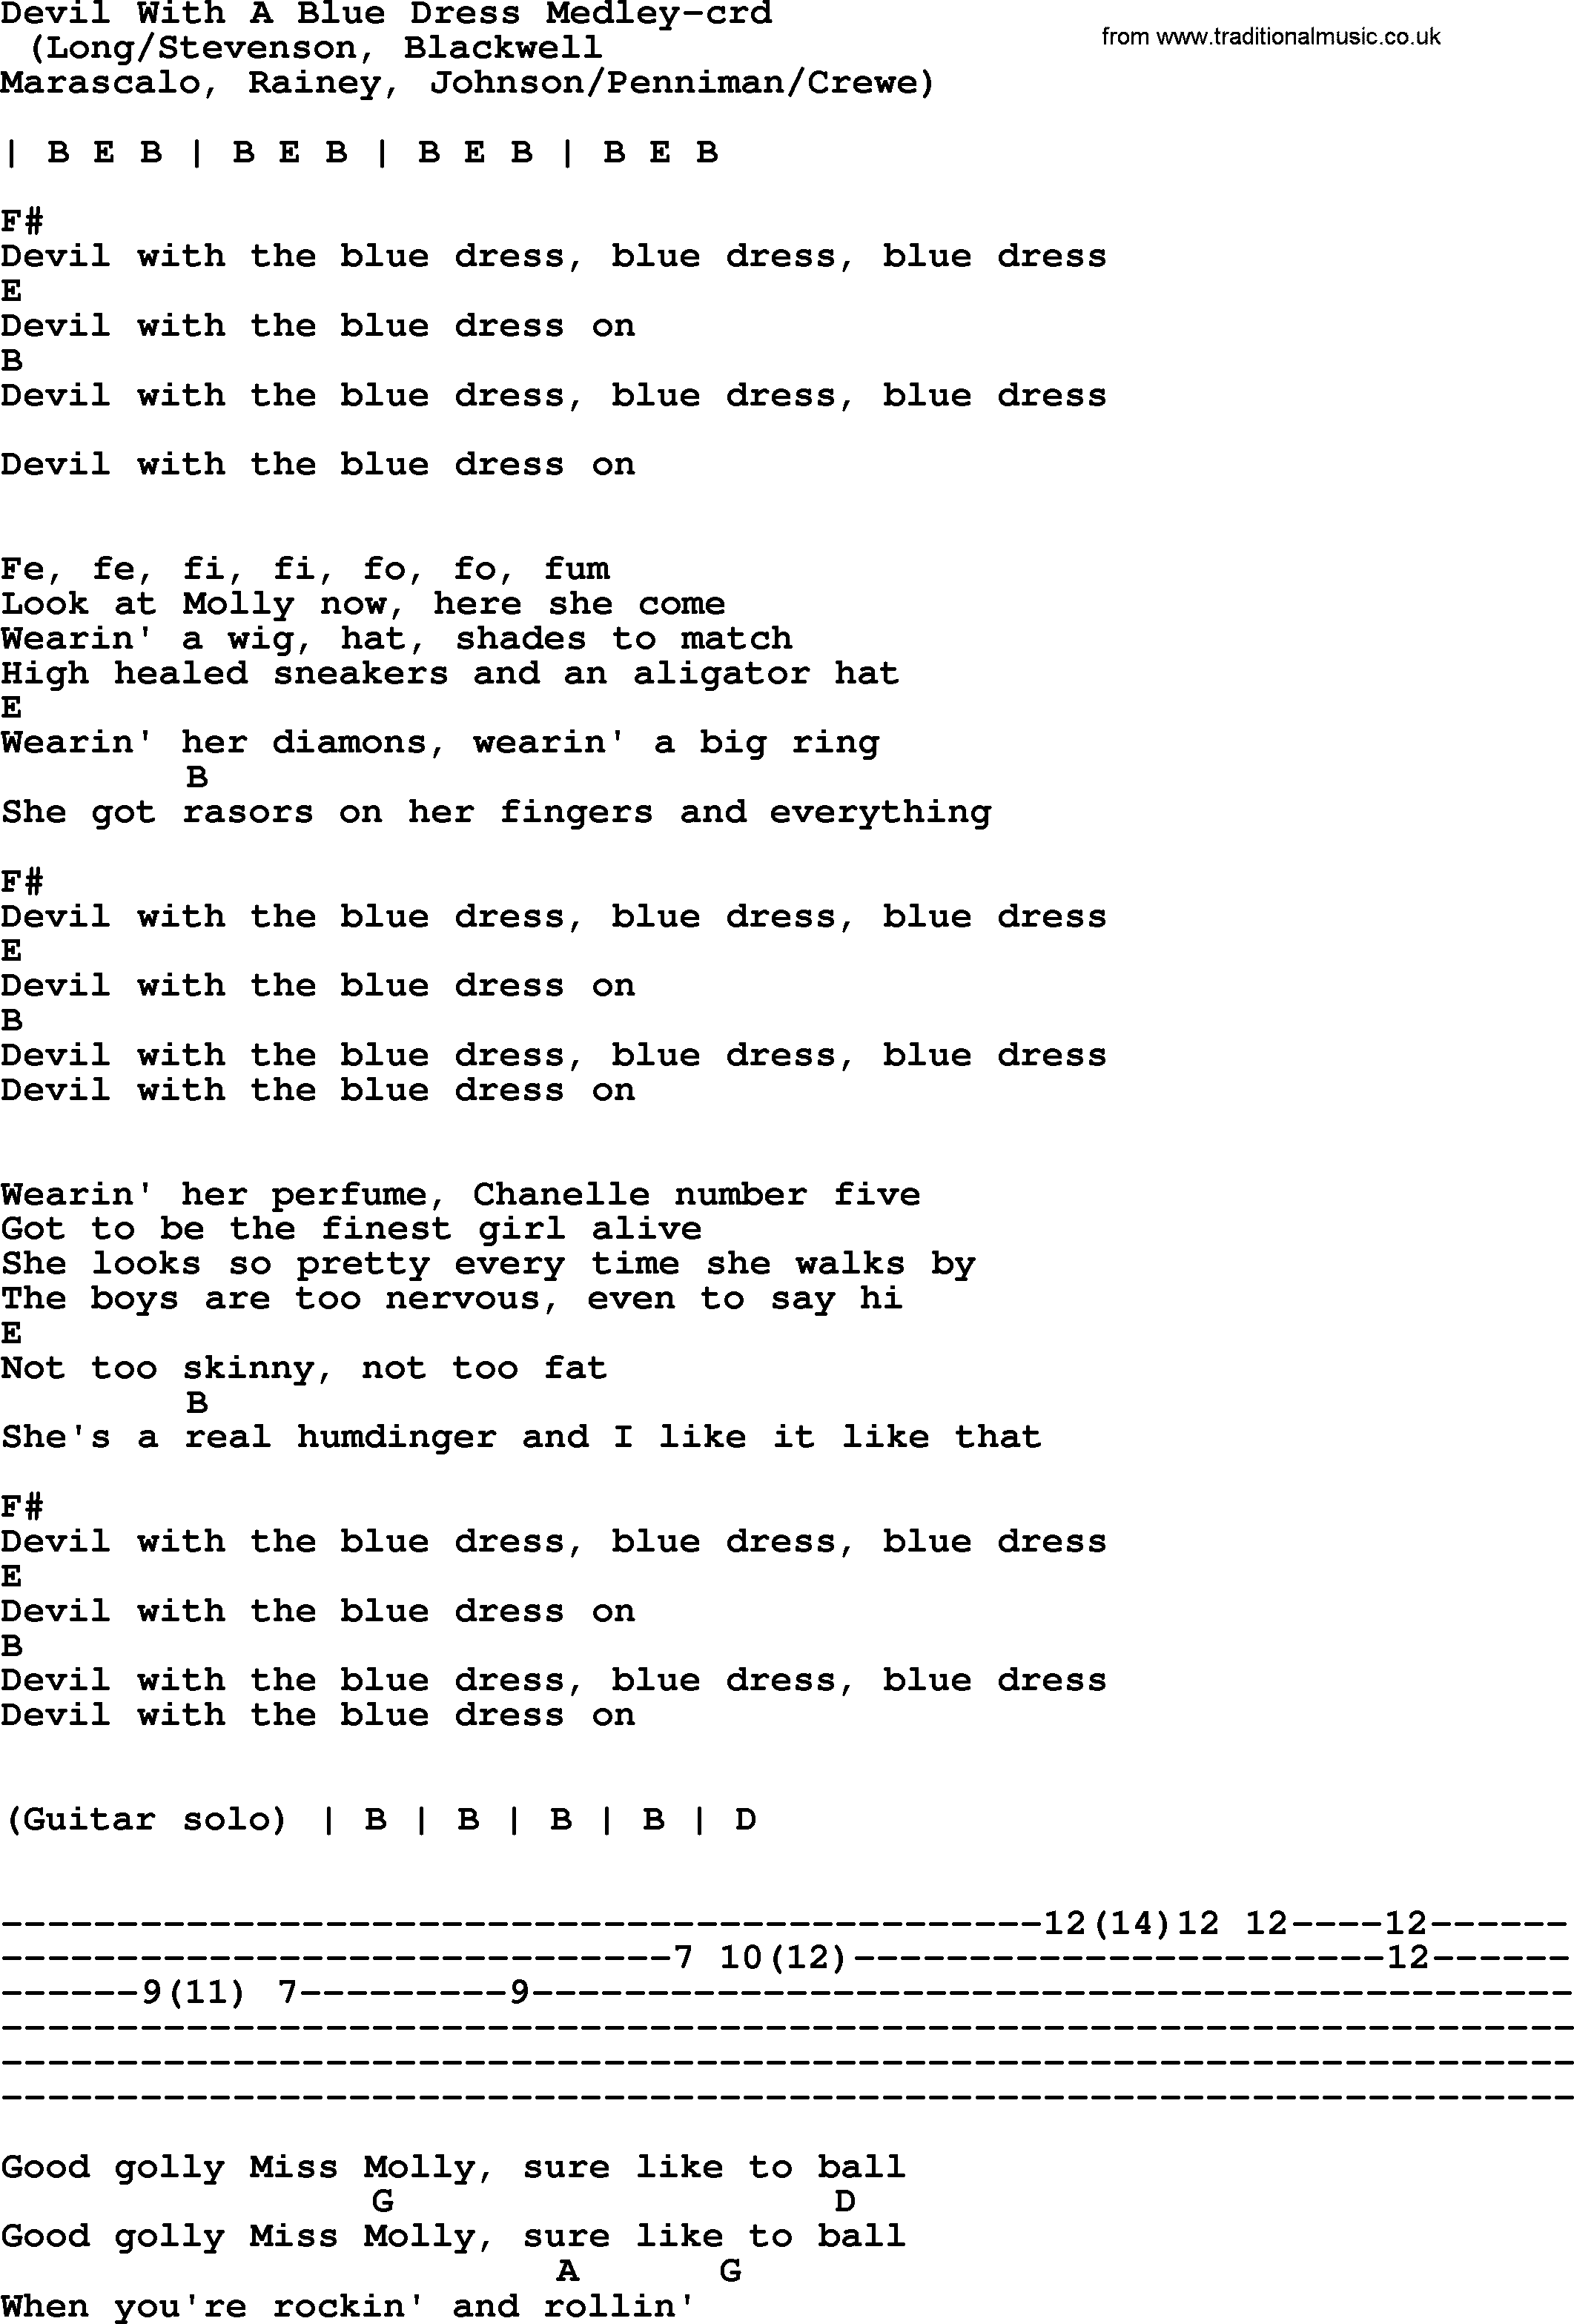 devil with a blue dress lyrics